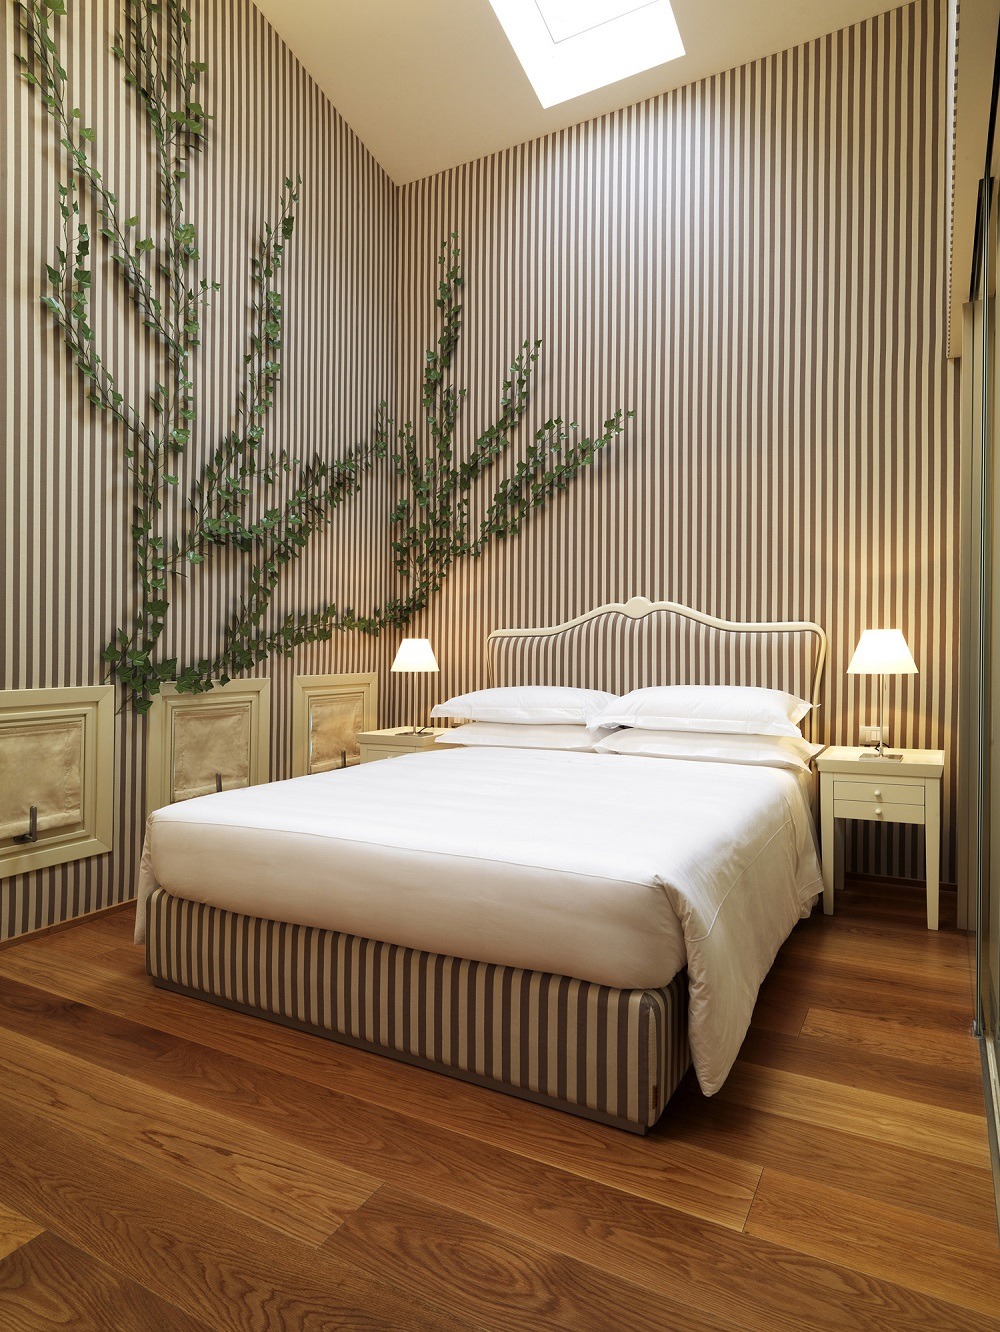 Craftsmanship and One-Bedroom Hotels with Fashion Designer